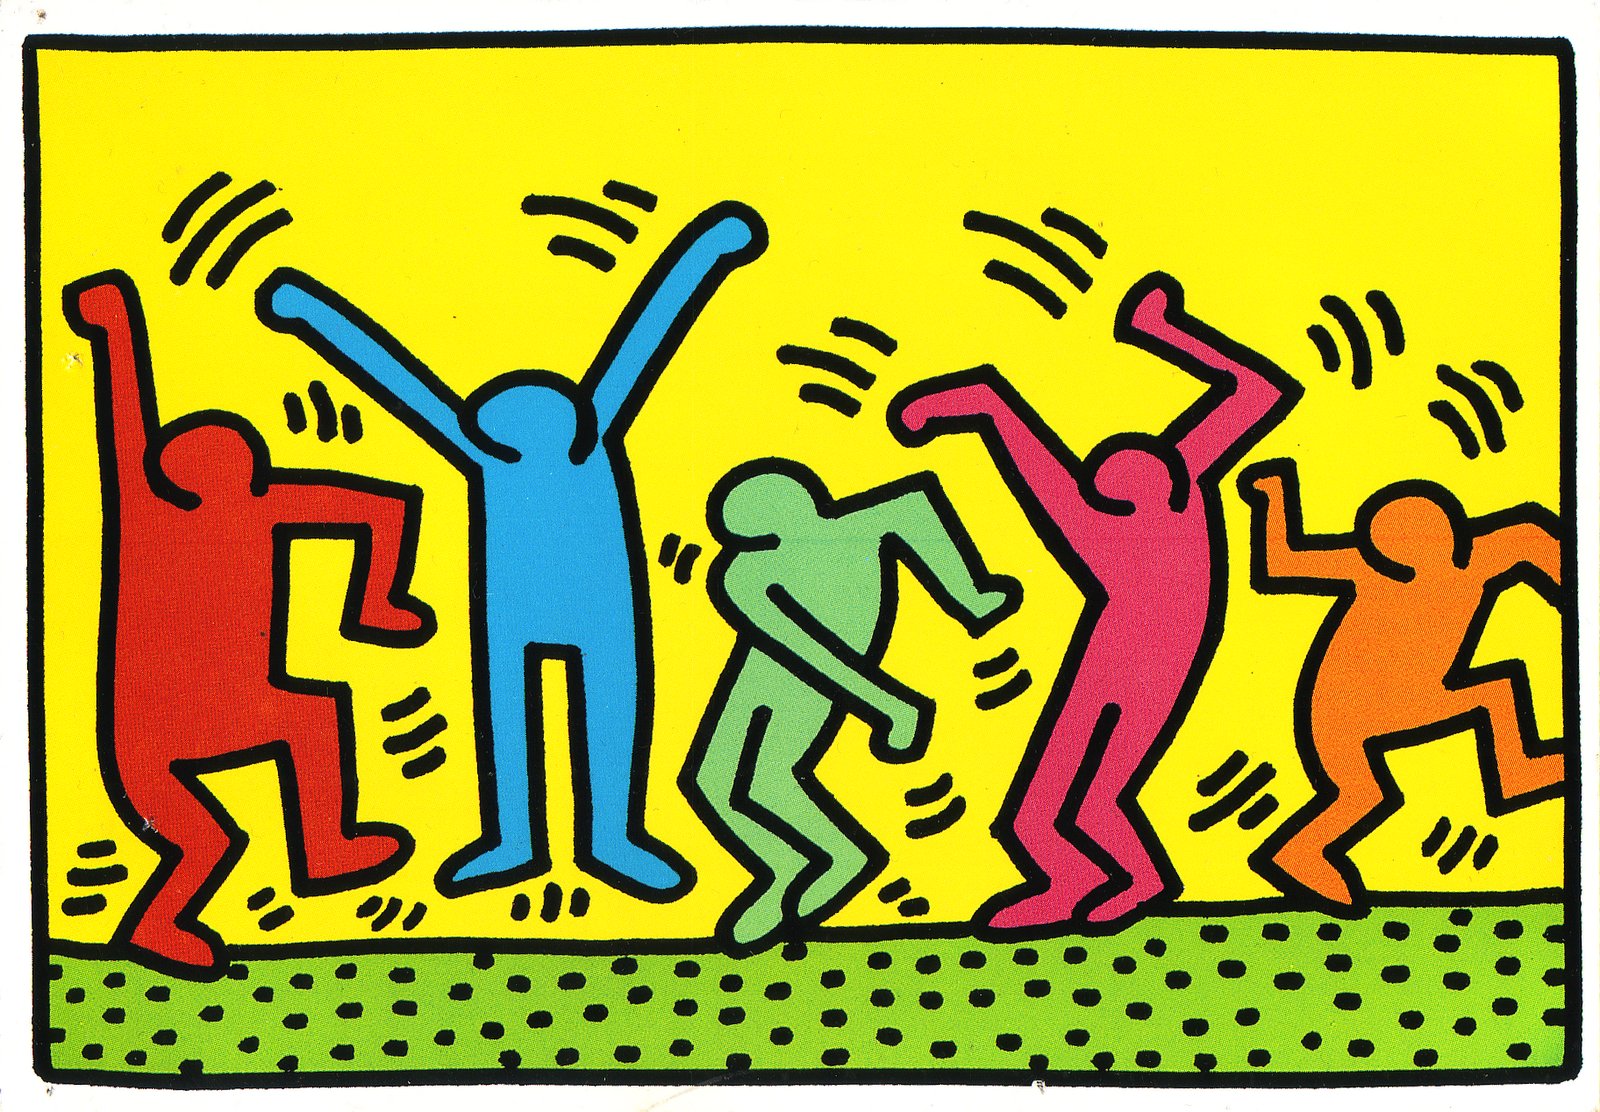 Cartoons Of People Dancing | Free Download Clip Art | Free Clip ...